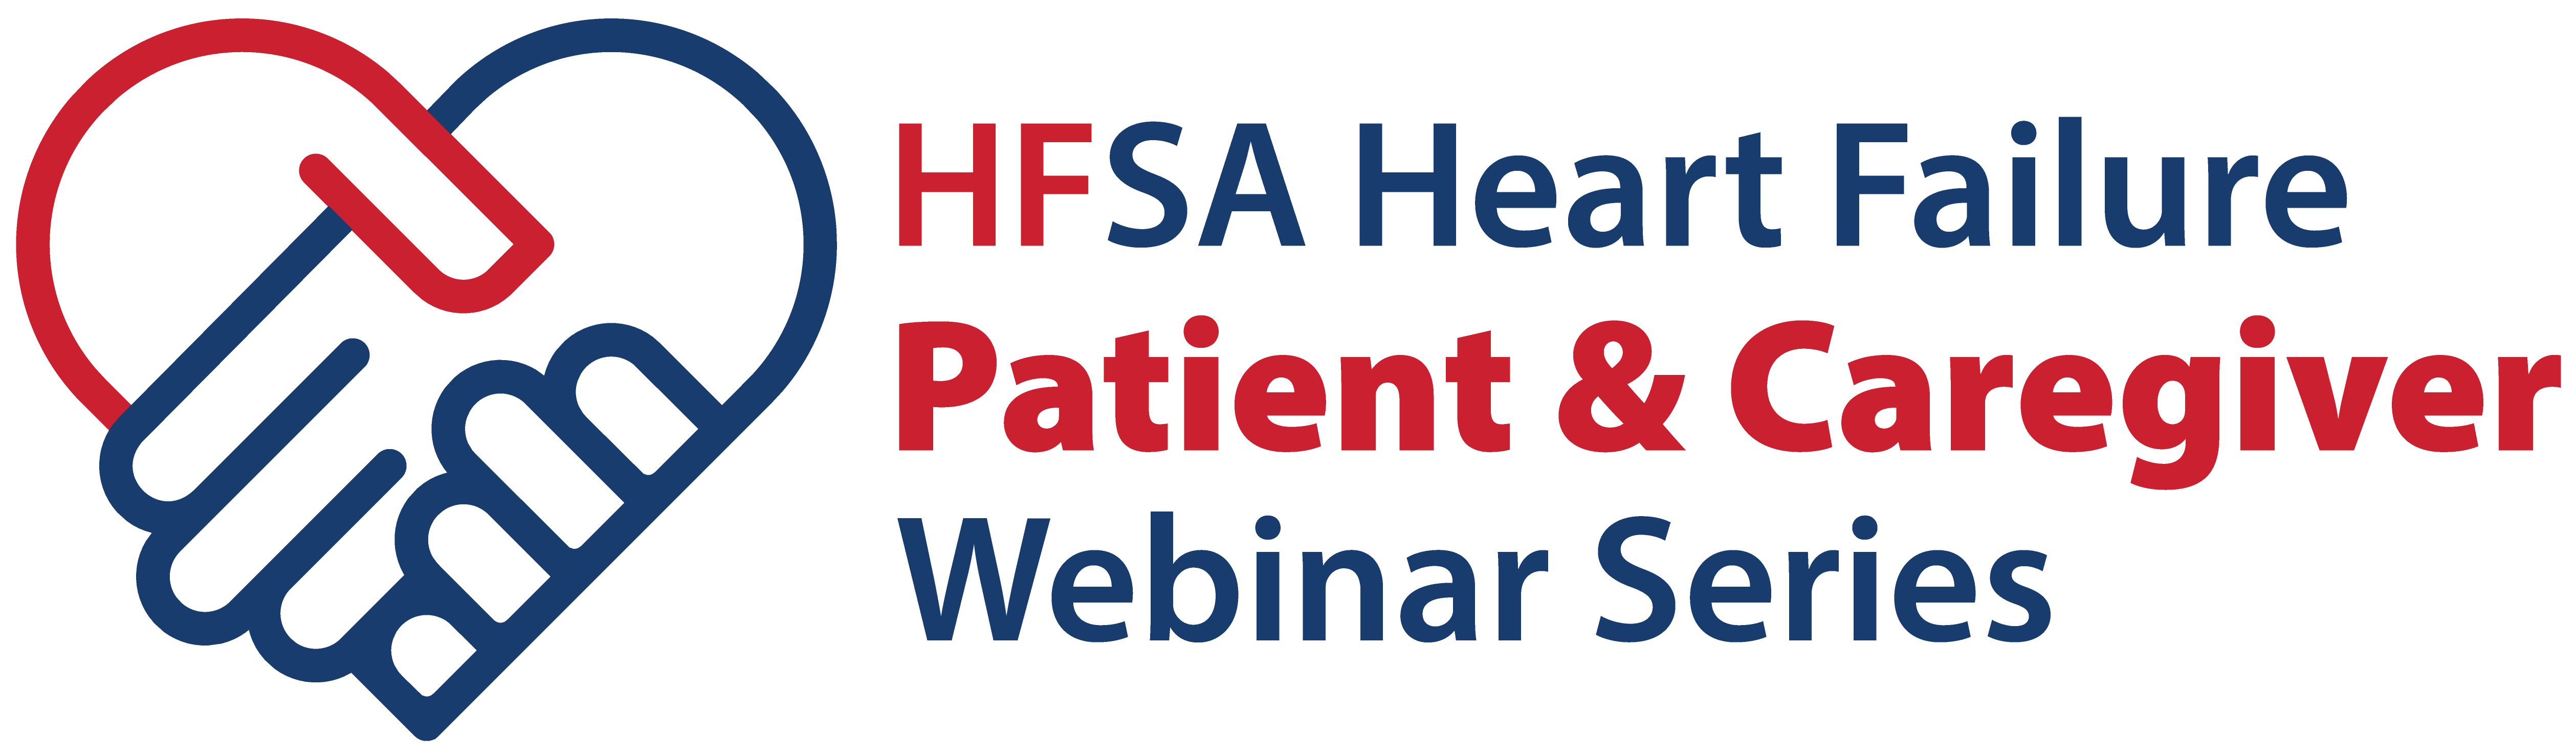 HFSA Patient & Caregiver Webinar Series Logo